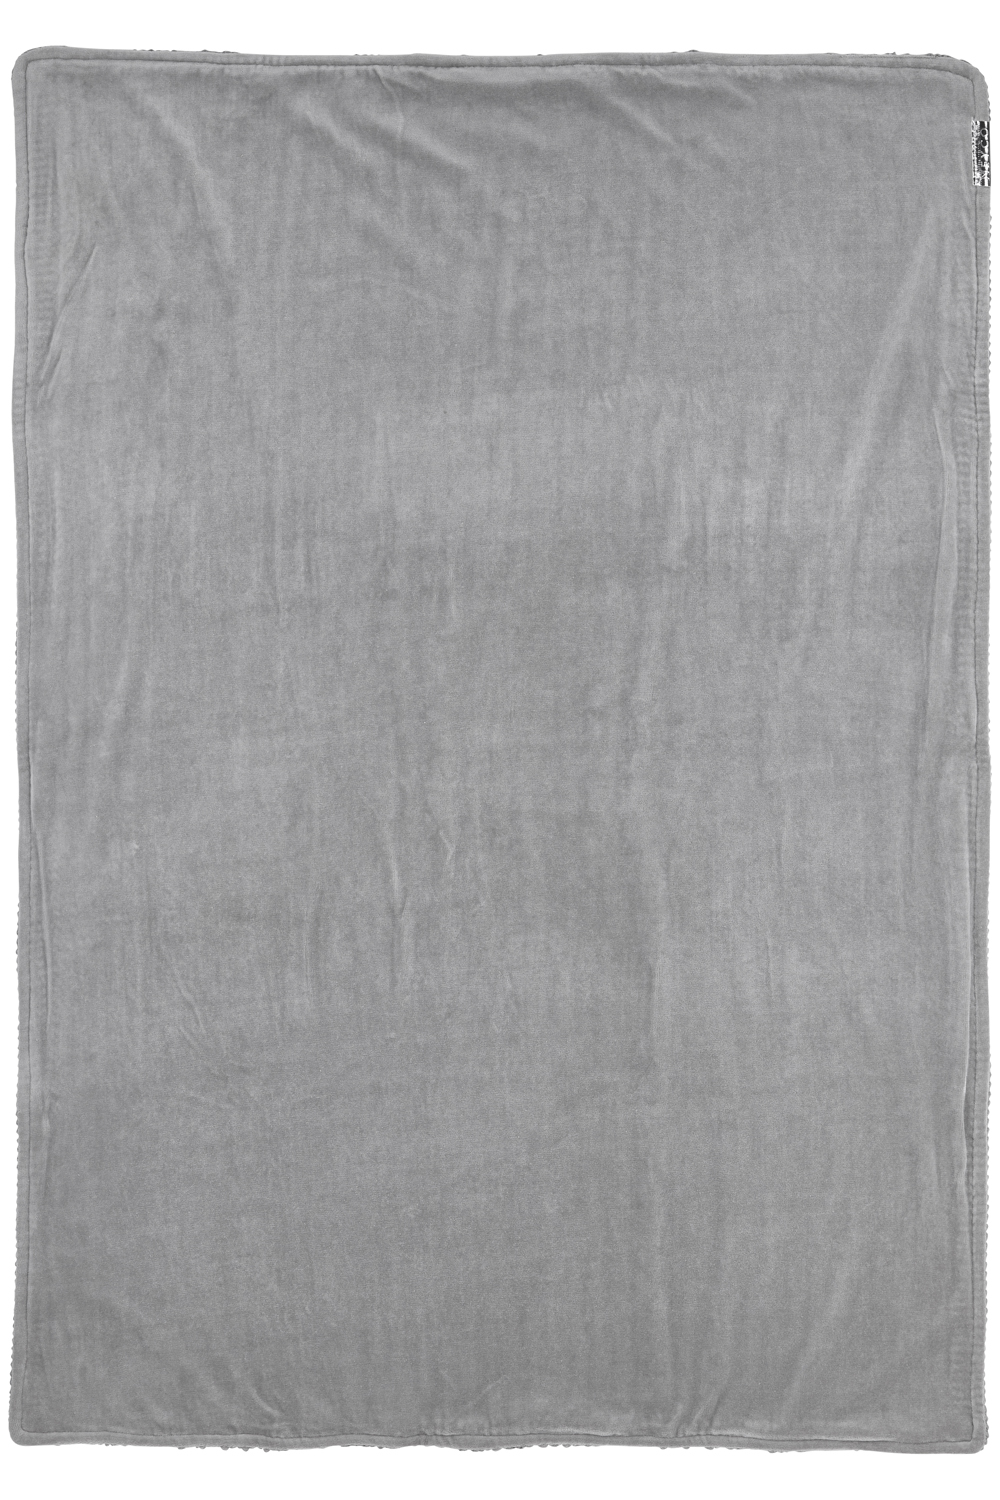 Wiegdeken Herringbone velvet - grey - 75x100cm